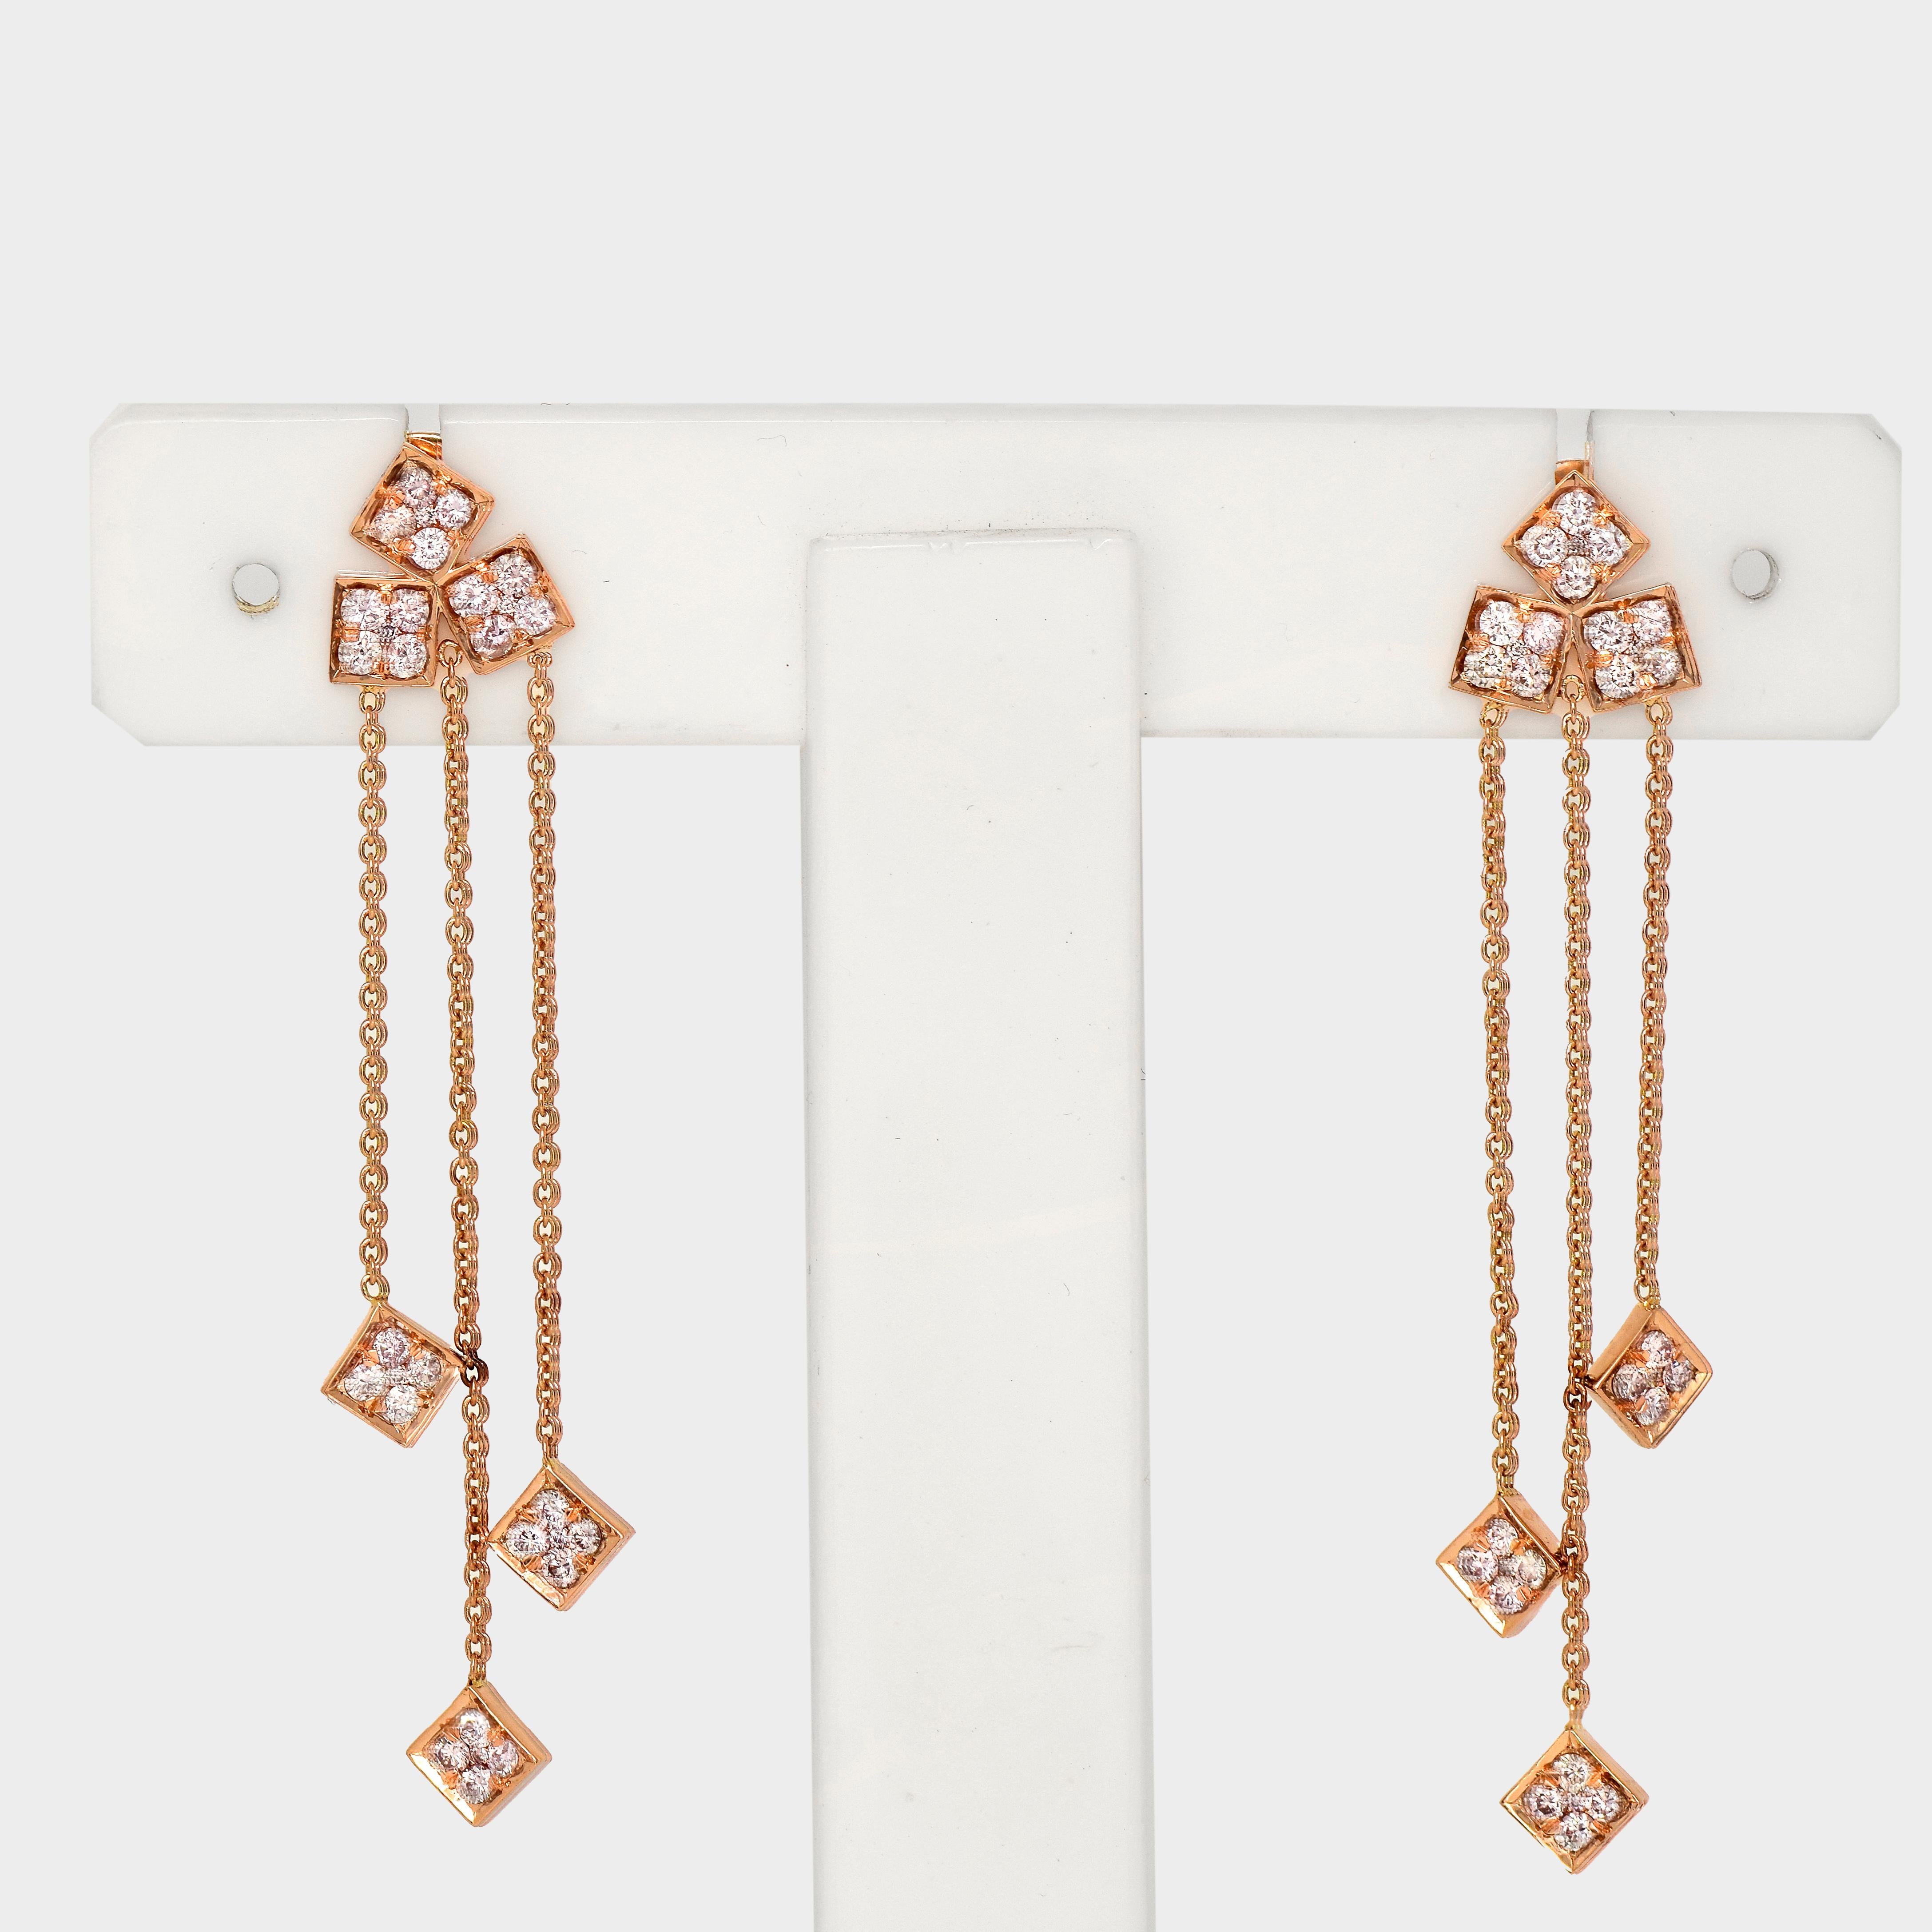 Contemporary IGI 14K 1.33 ct Natural Pink Diamonds Art Deco Design Stud Earrings For Sale